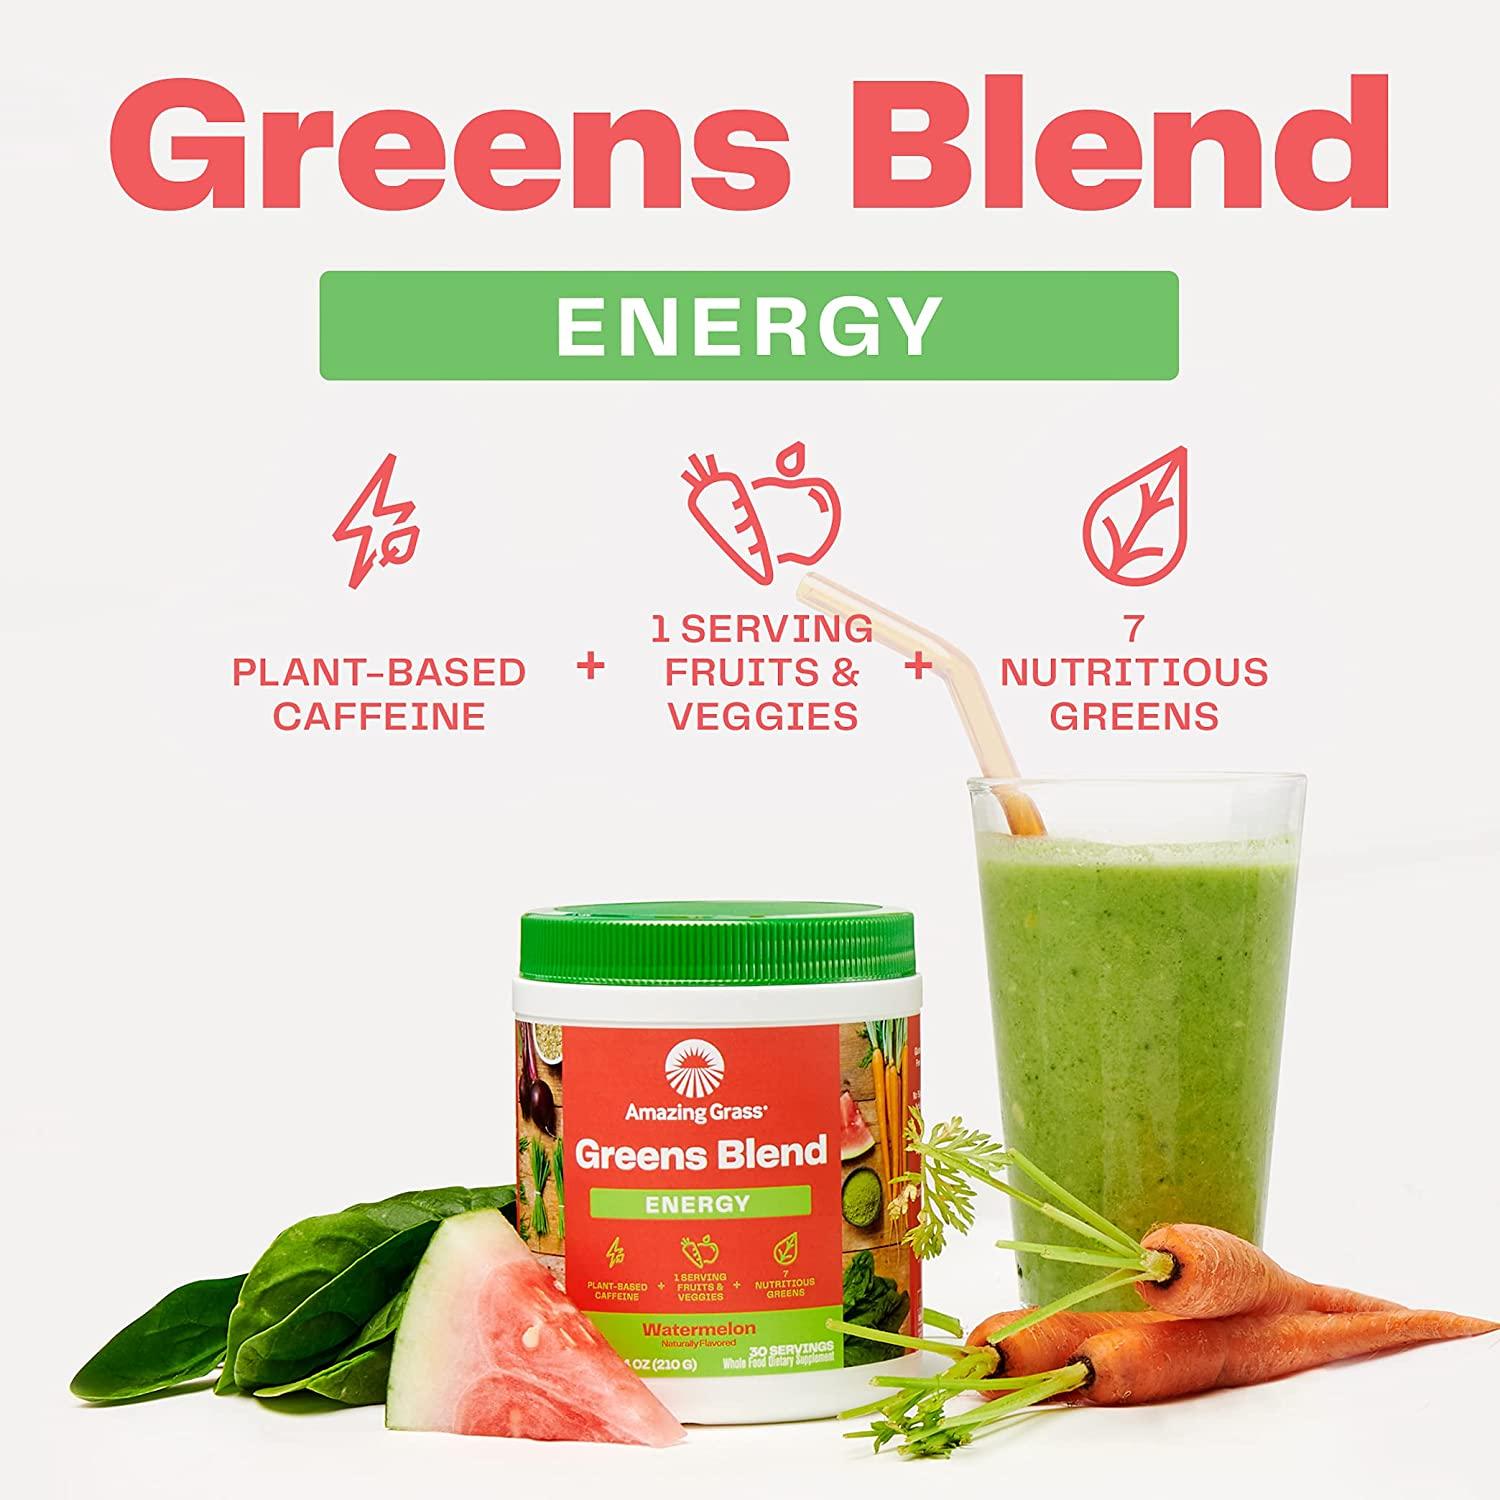 Amazing Grass, Green Superfood, Energy, Watermelon, 7.4 oz (210 g)